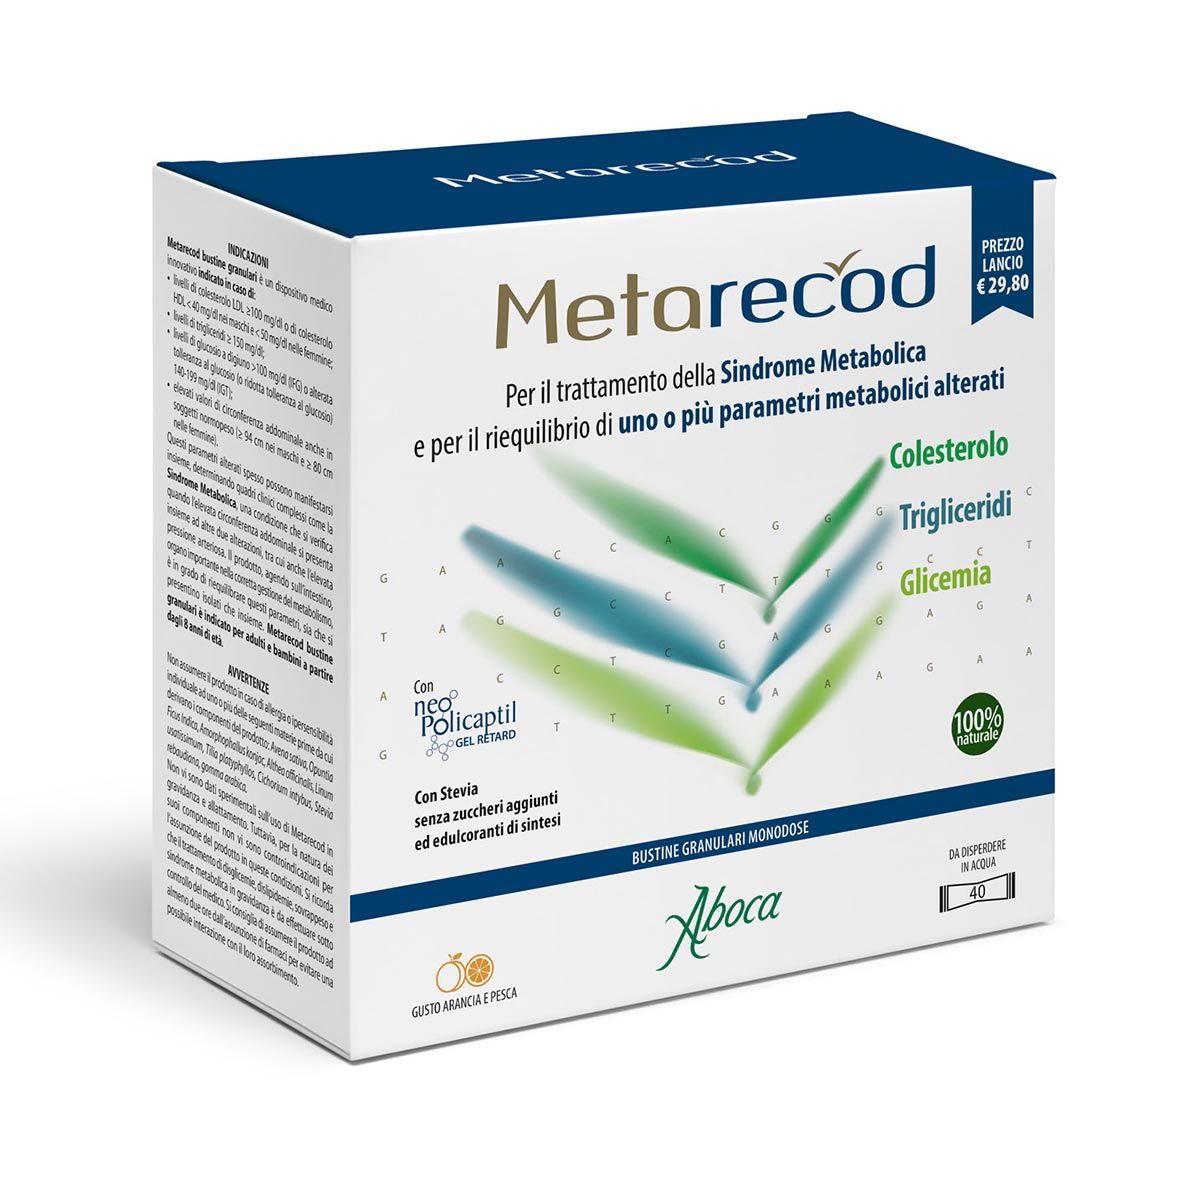 Aboca Metarecod Sindrome Metabolica 40 Bustine